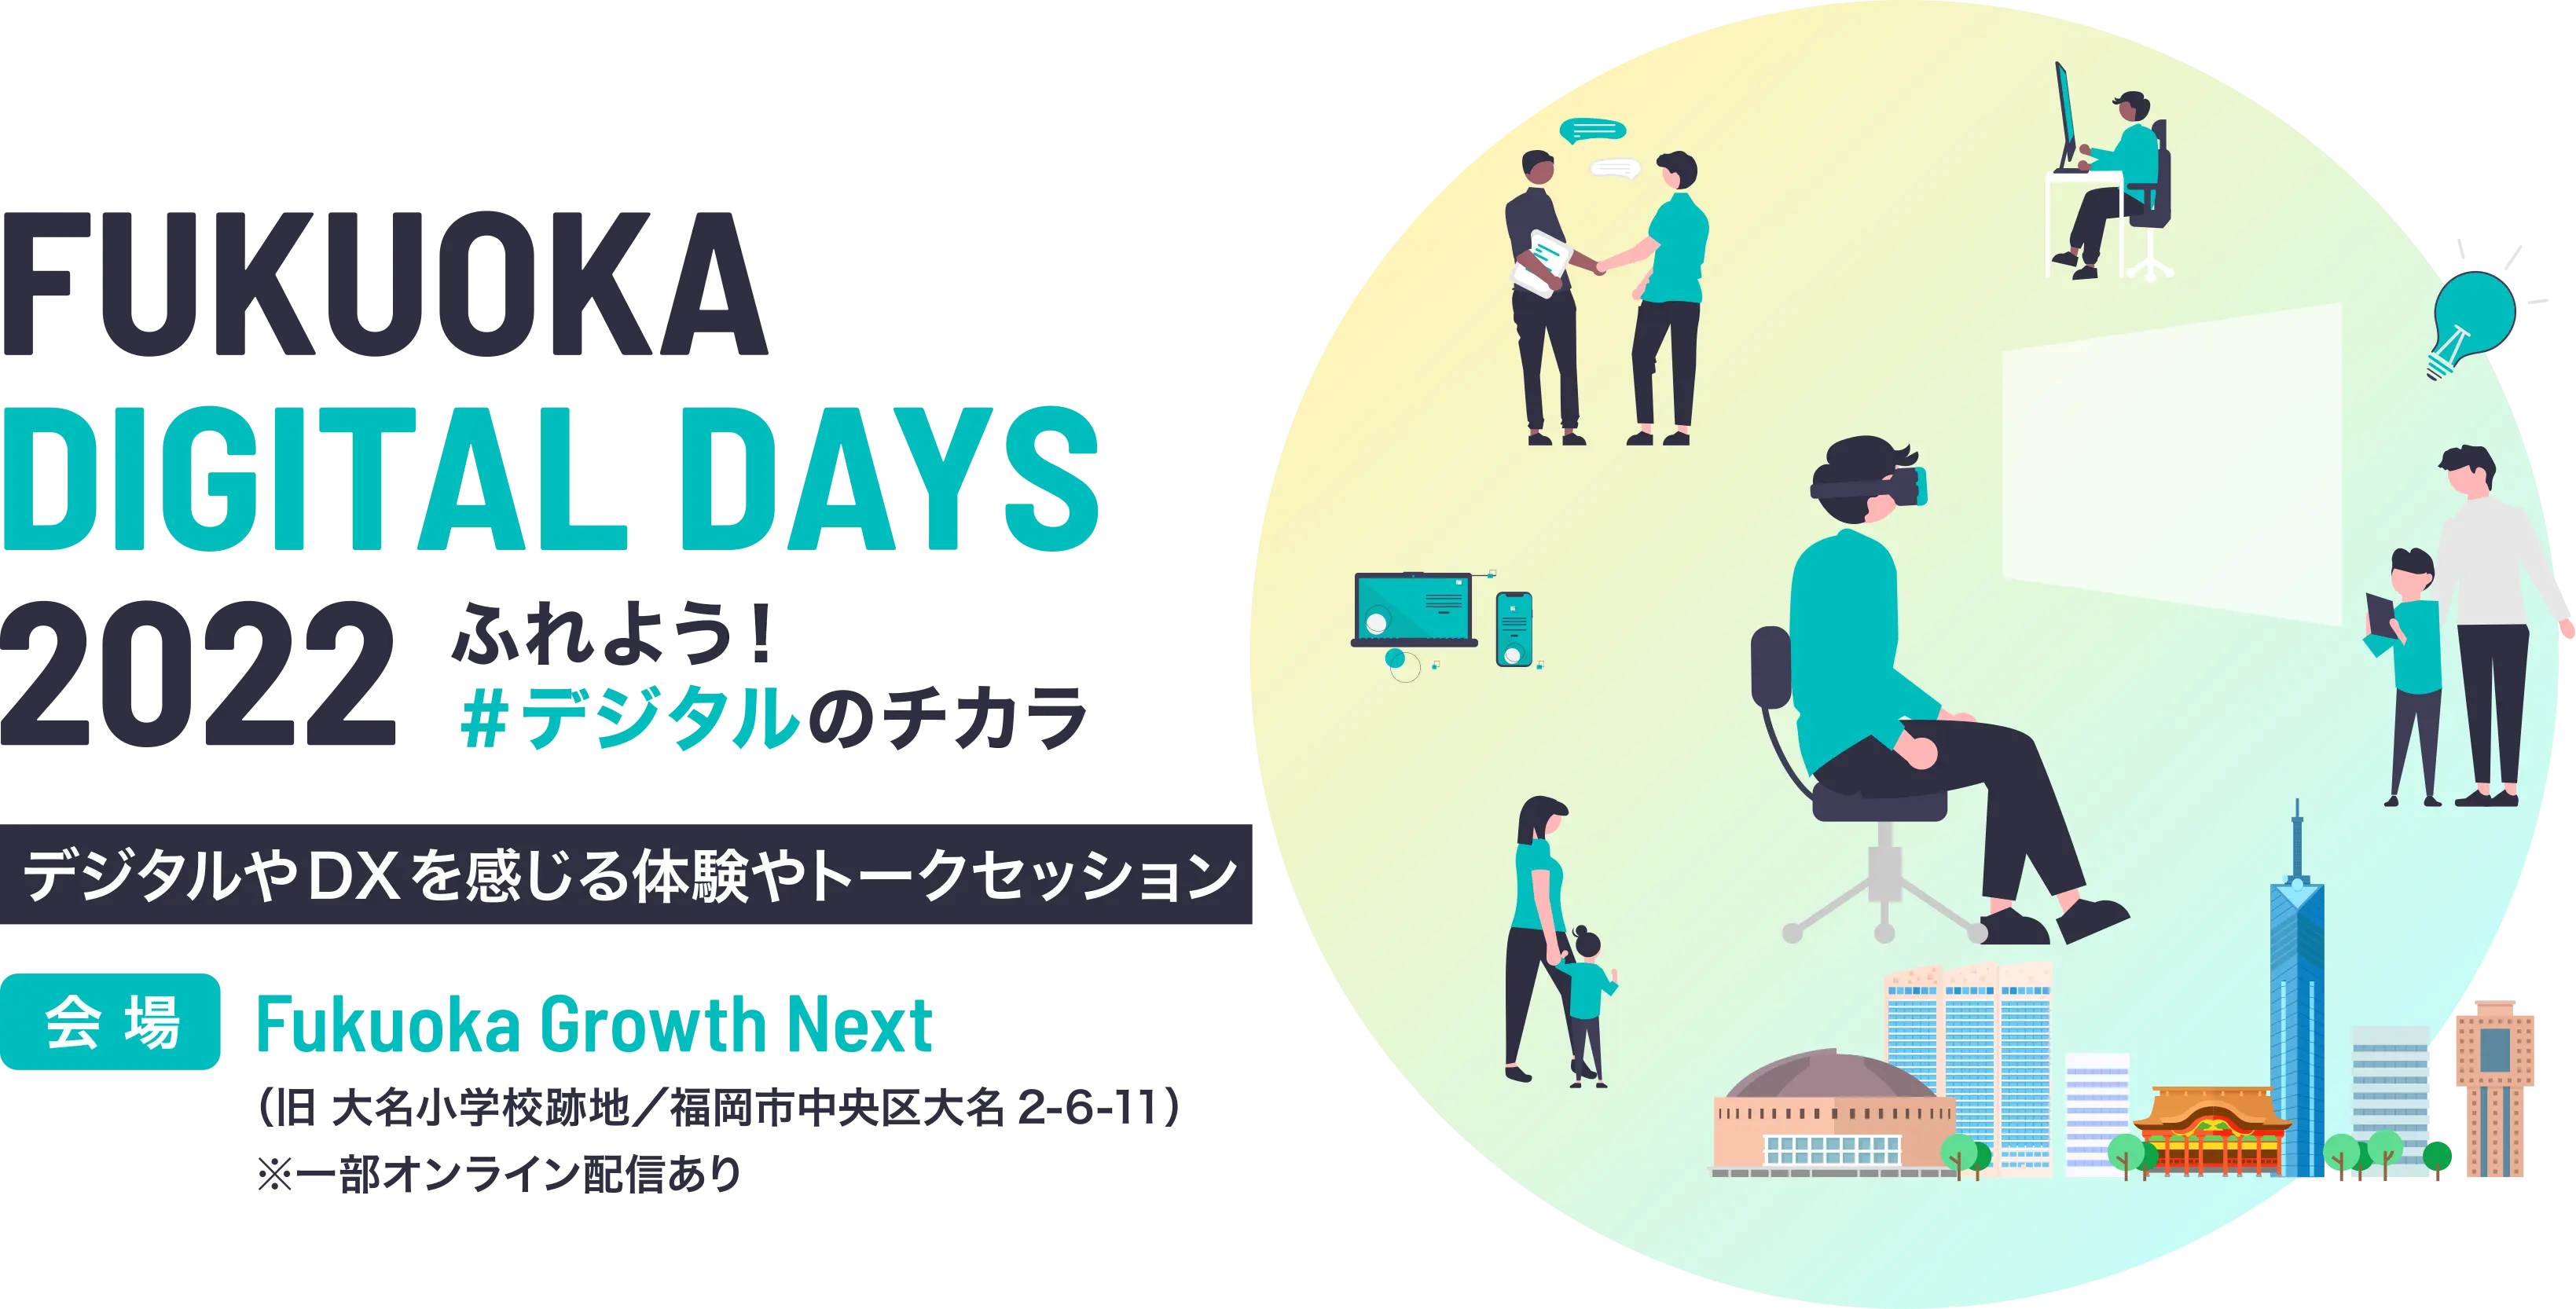 『FUKUOKA DIGITAL DAYS 2022』にカンパニー社長の神尾が登壇します。